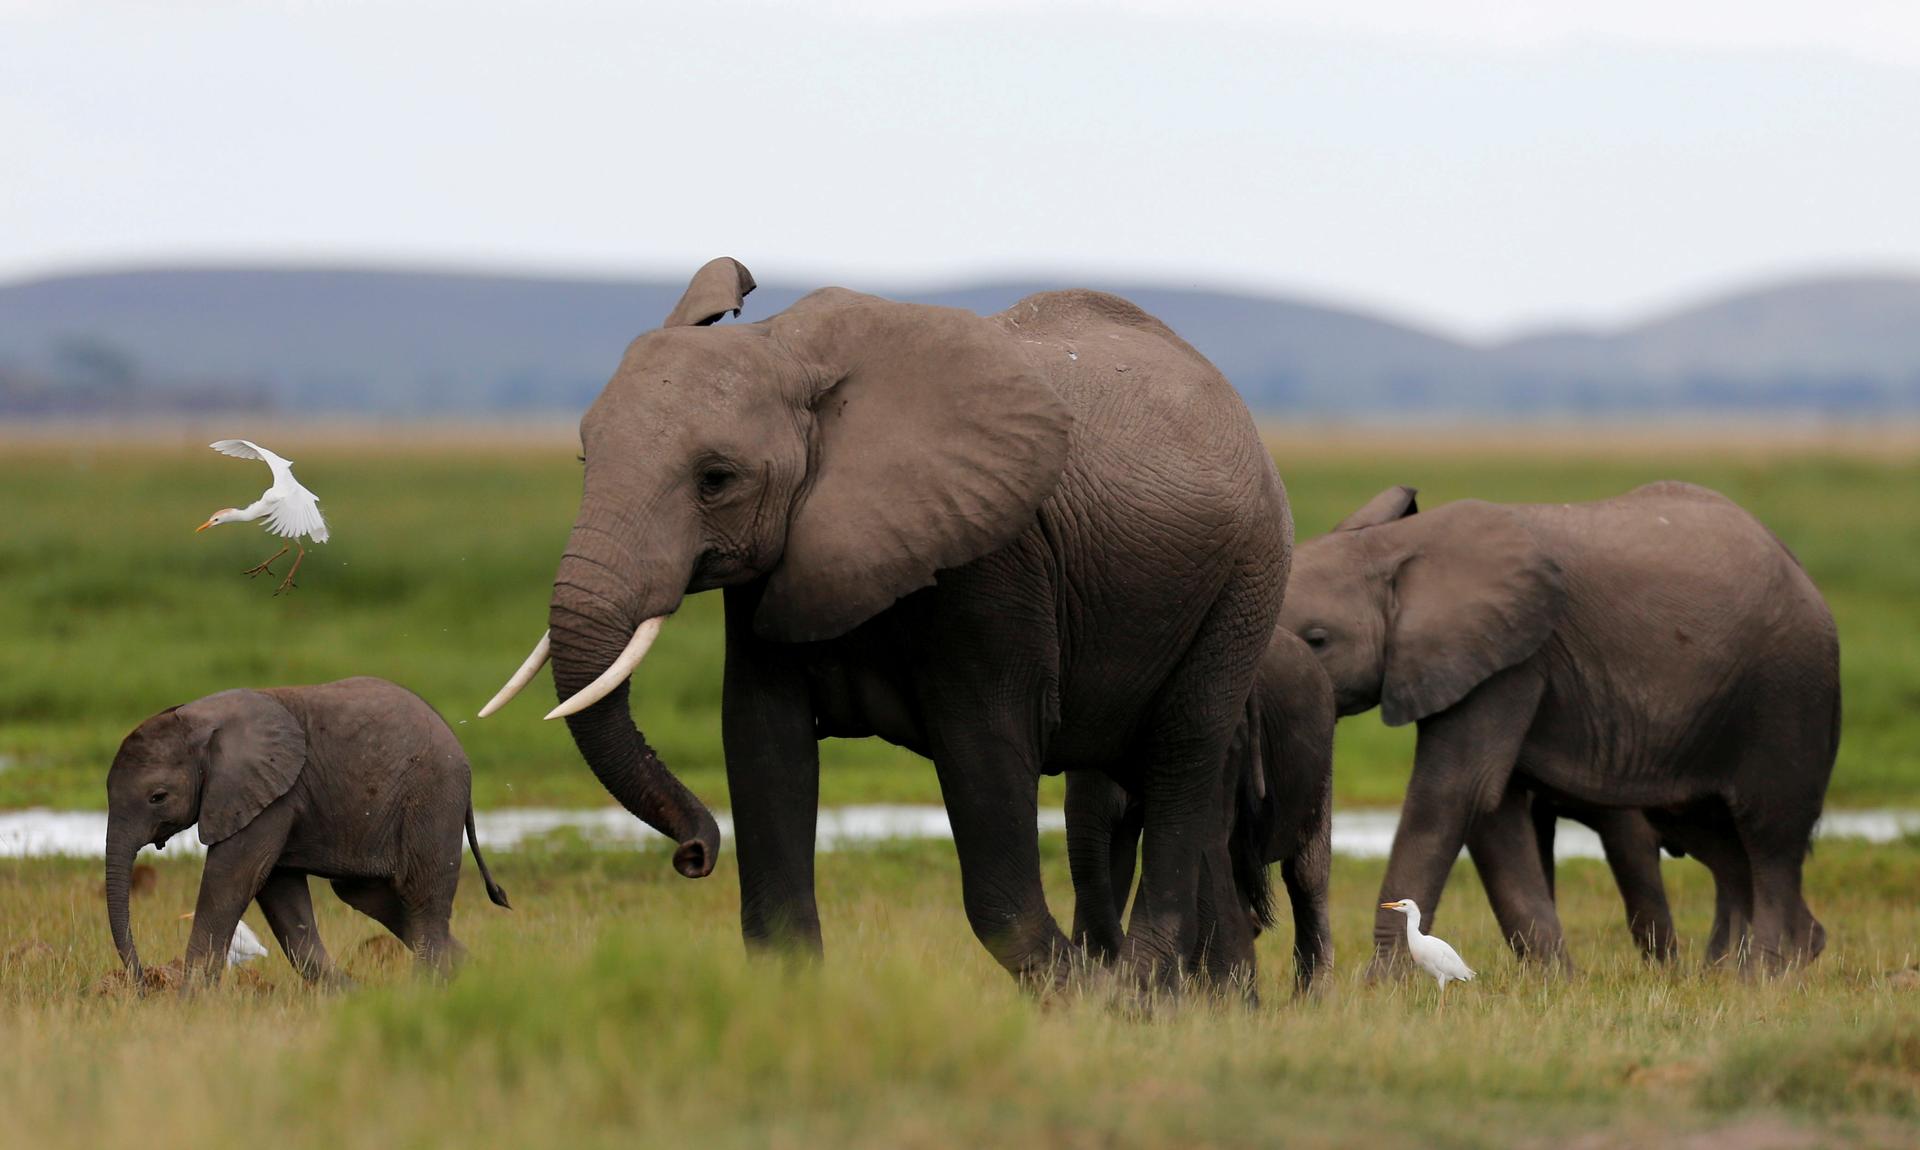 A family of elephants in Kenya's Amboseli National Park.